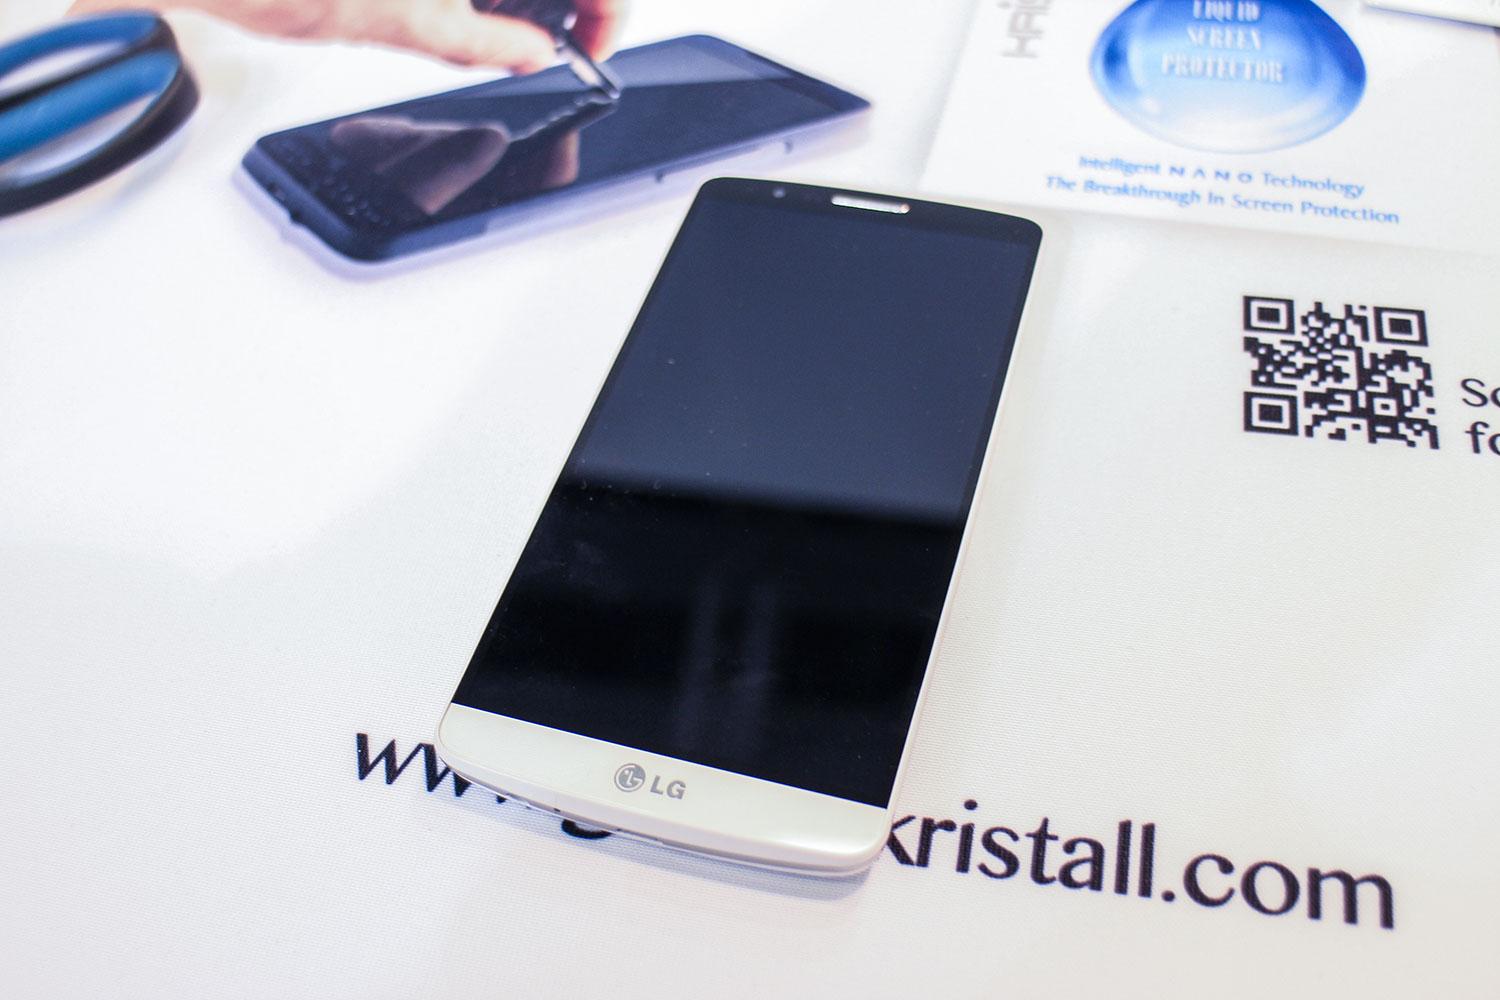 Kristall Liquid Screen Protector phone